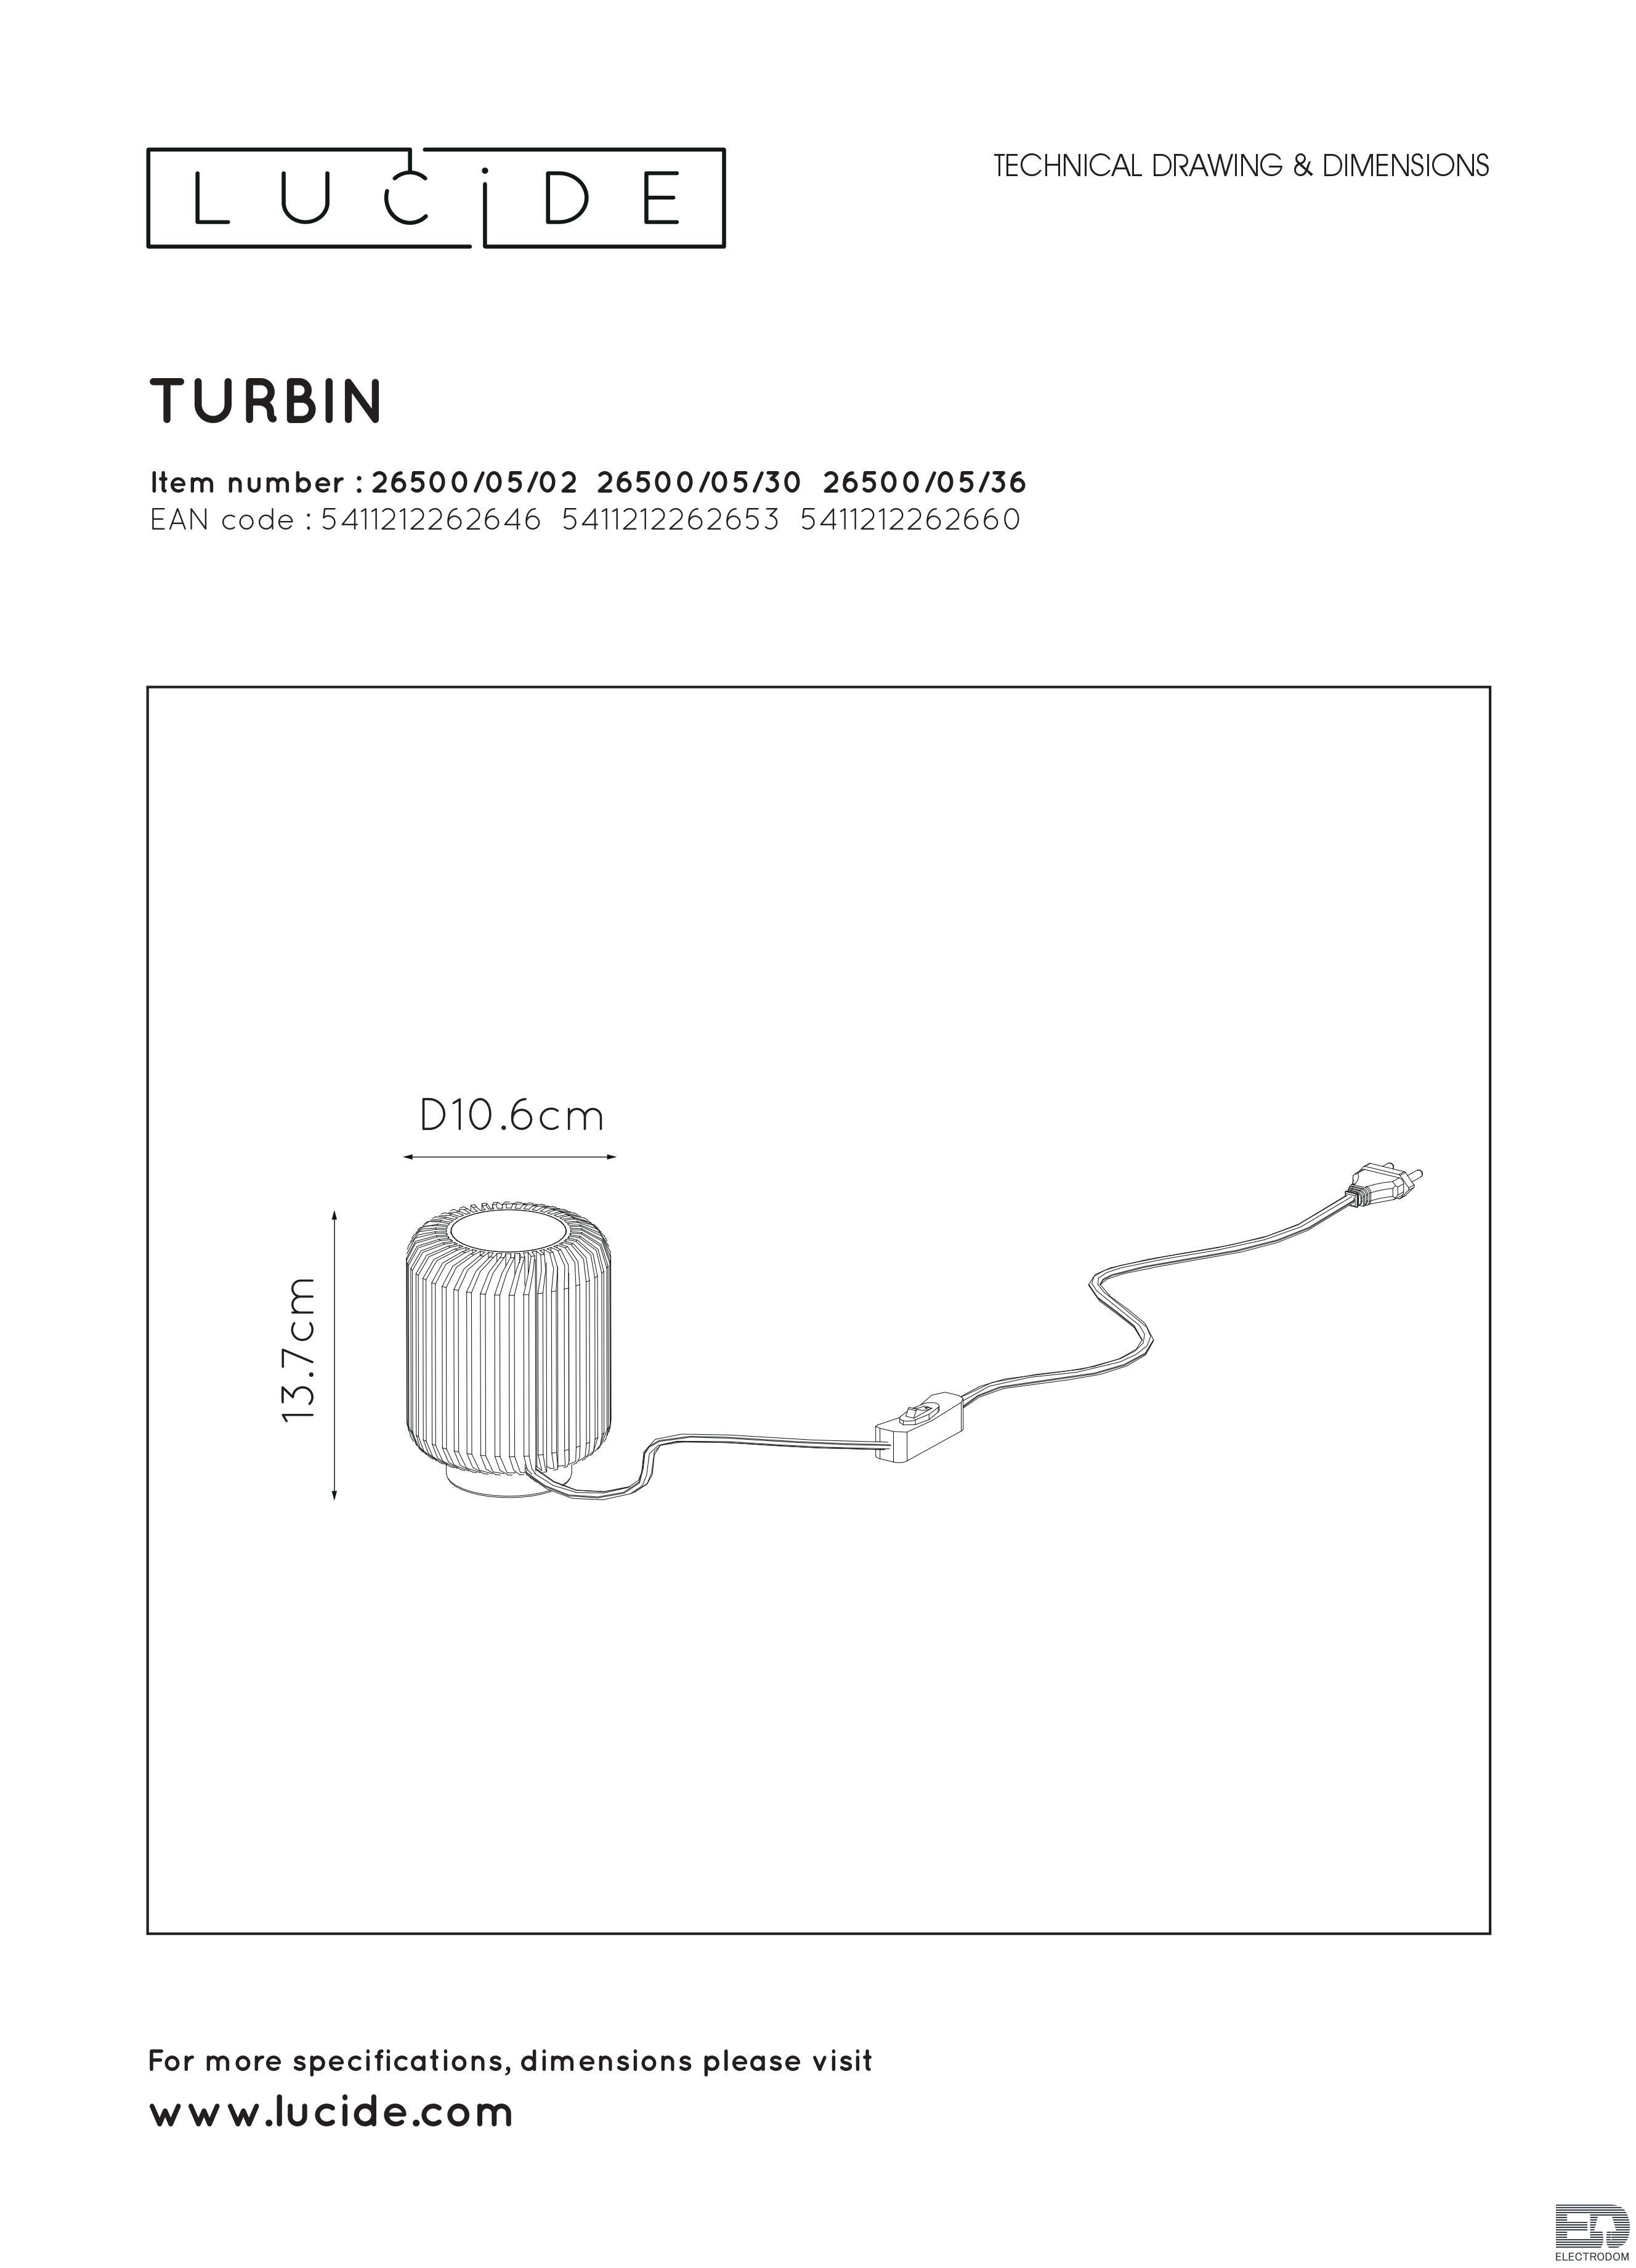 Настольная лампа Lucide Turbin 26500/05/30 - цена и фото 5